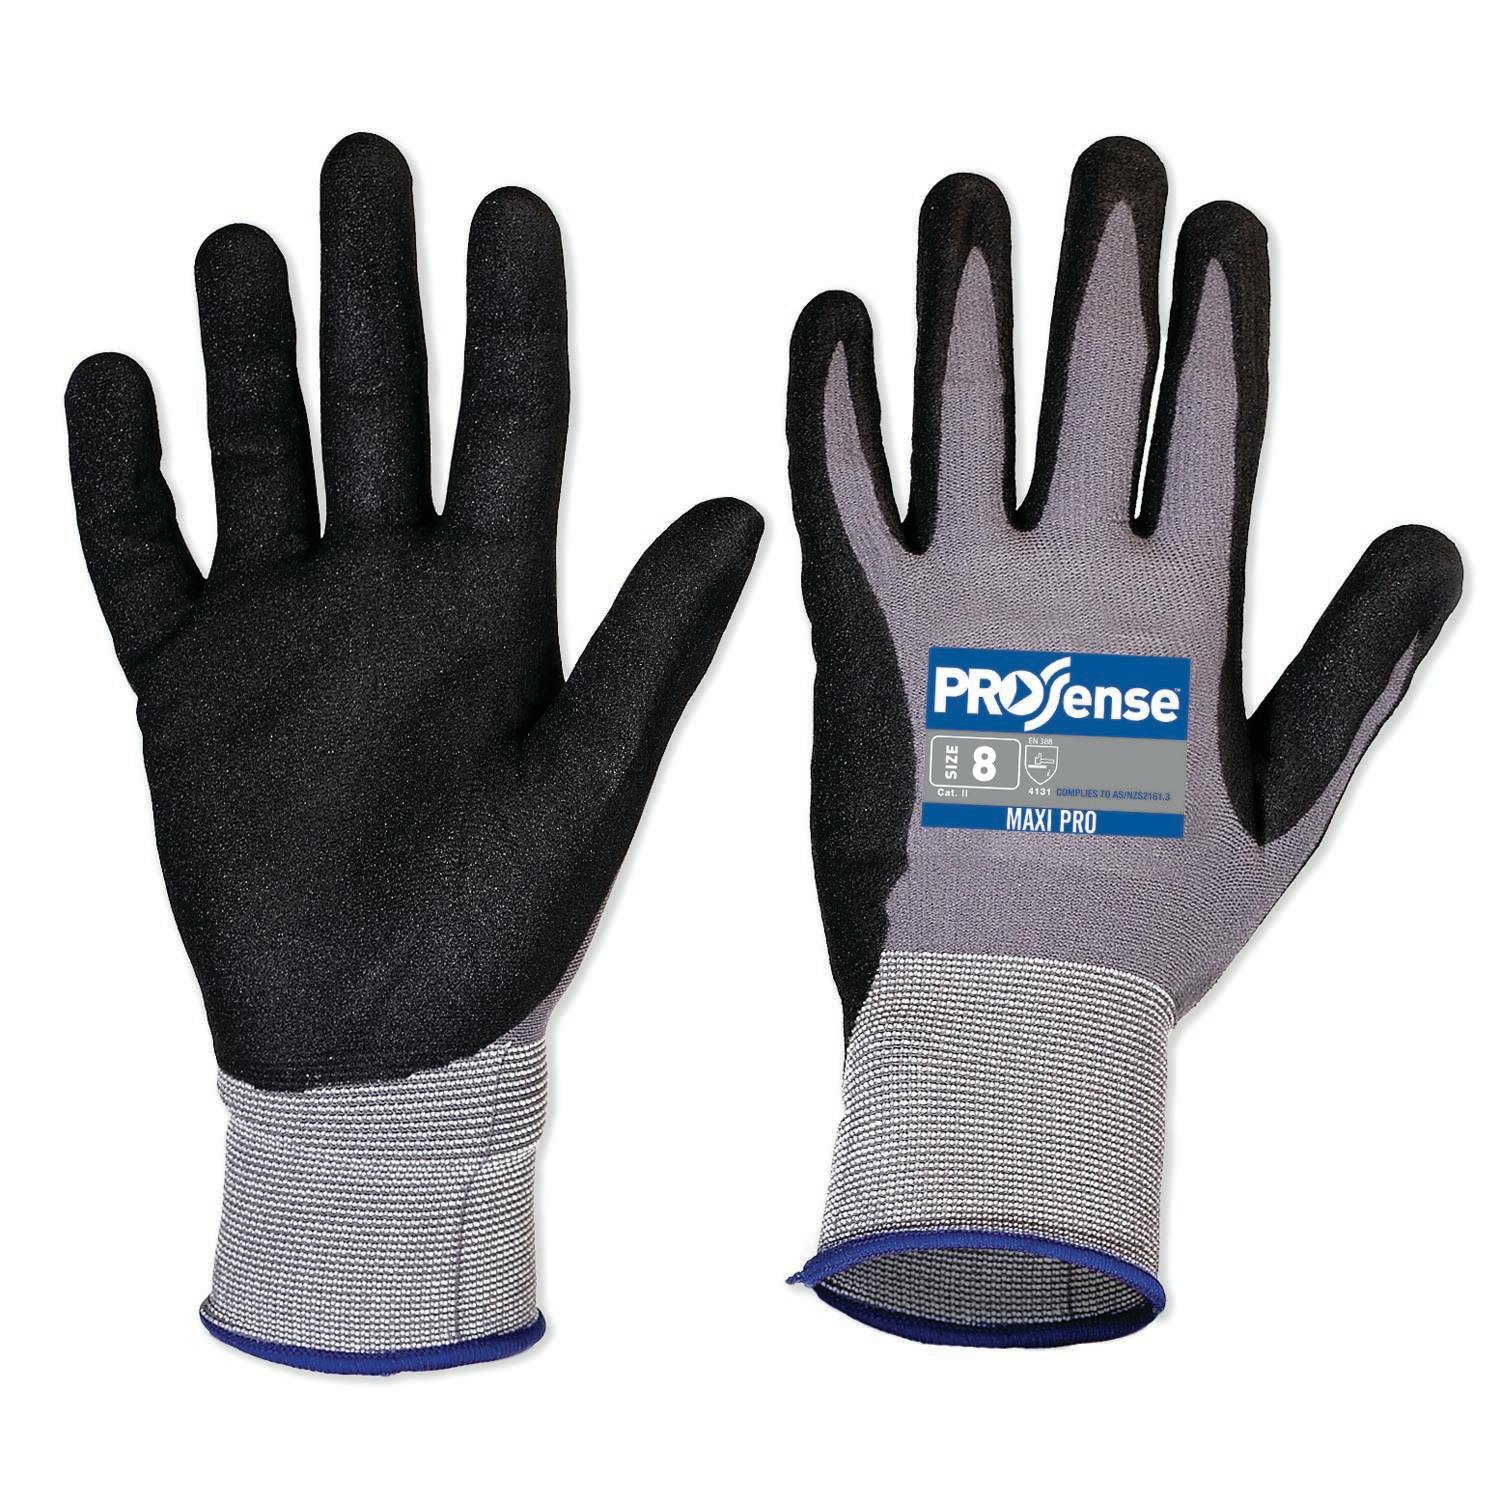 Pro Choice Prosense Maxi-Pro Gloves_1